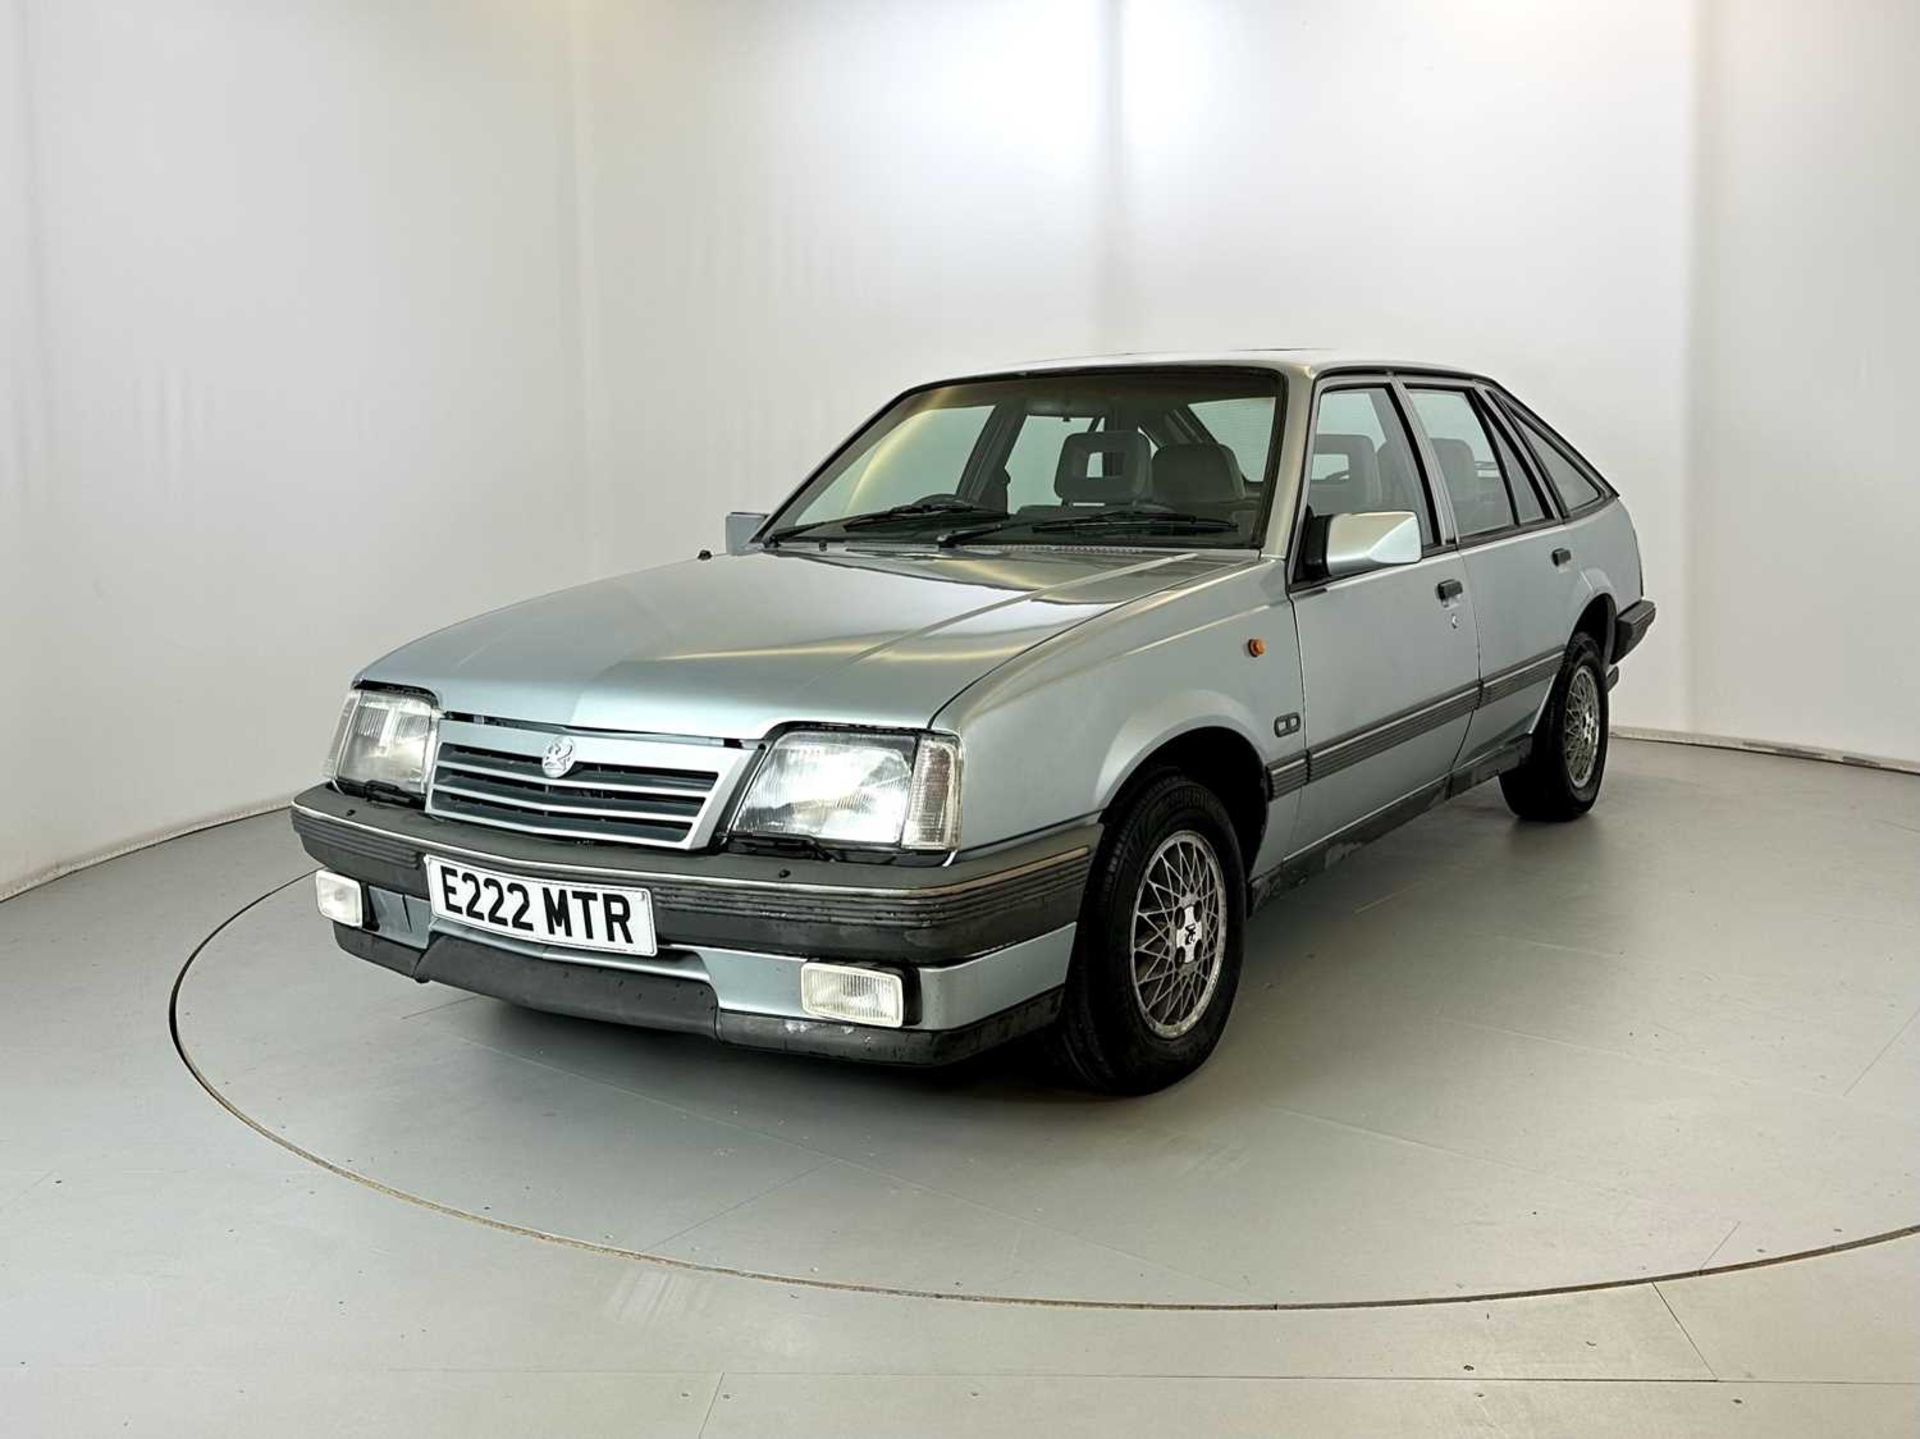 1988 Vauxhall Cavalier - Image 3 of 34